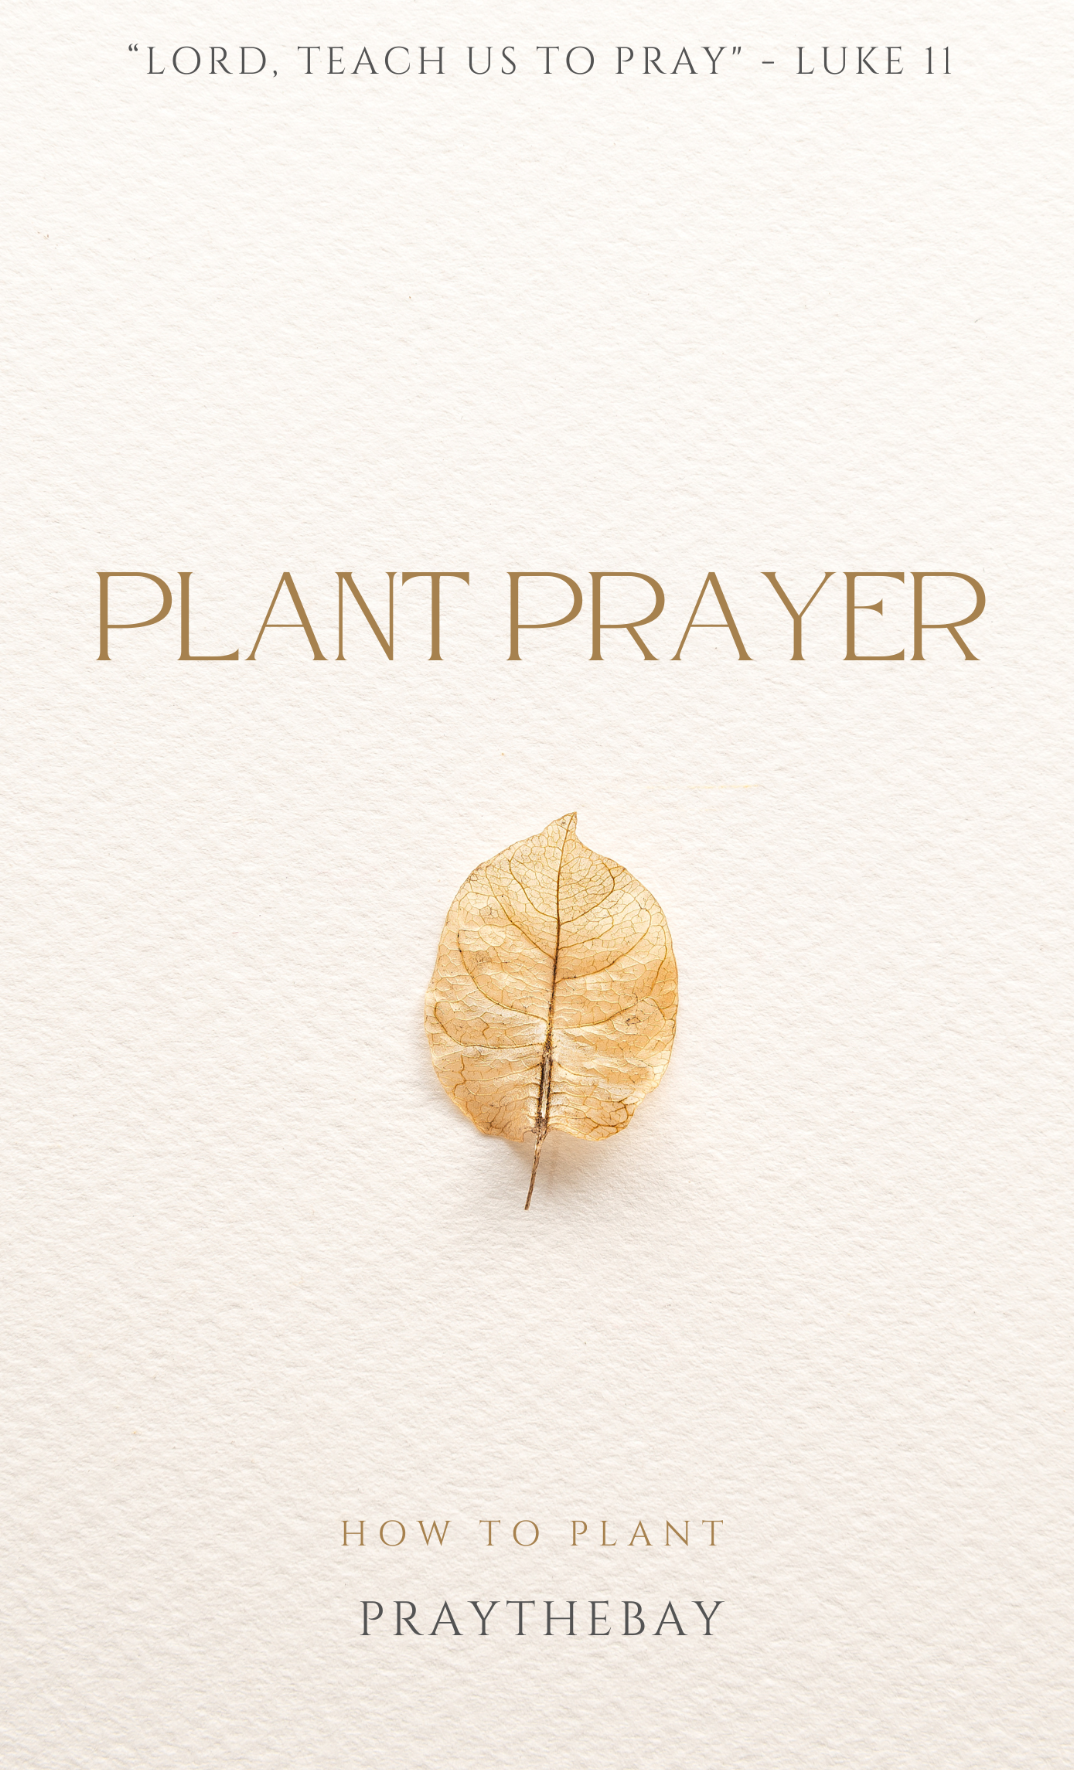 Plant Prayer Guide